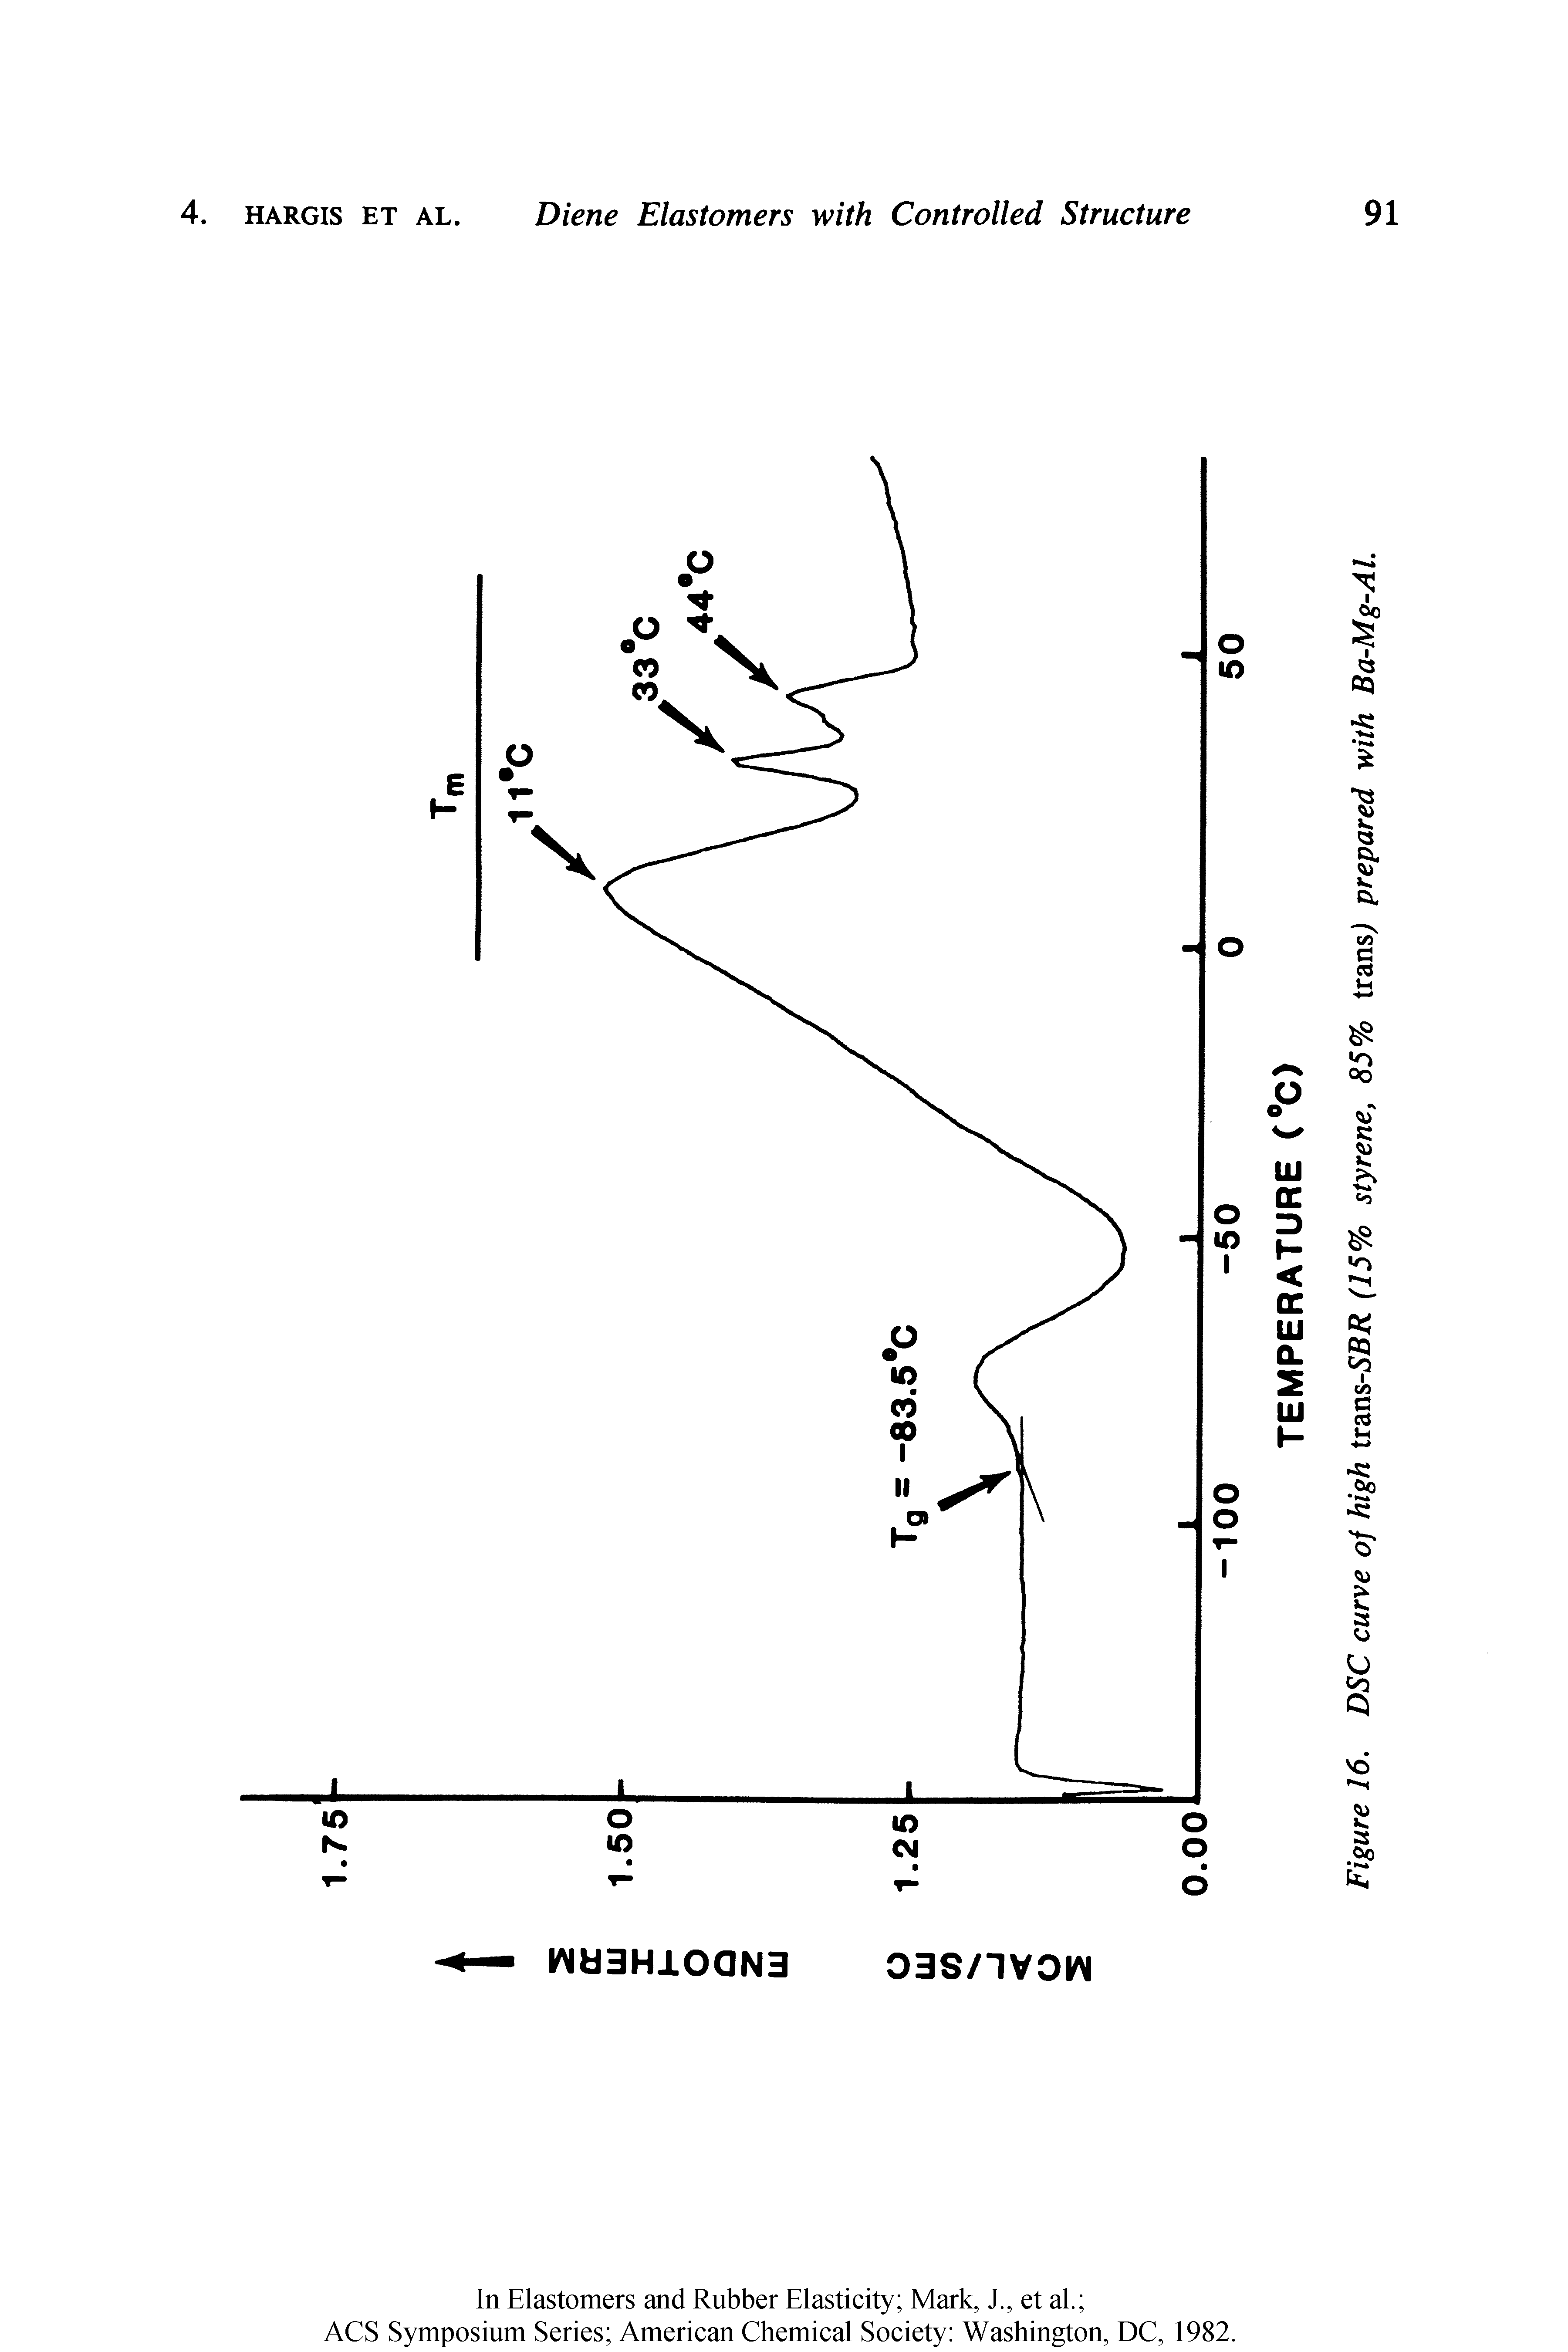 Figure 16. DSC curve of high trms-SBR (15% styrene, 85% transj prepared with Ba-Mg-Al.